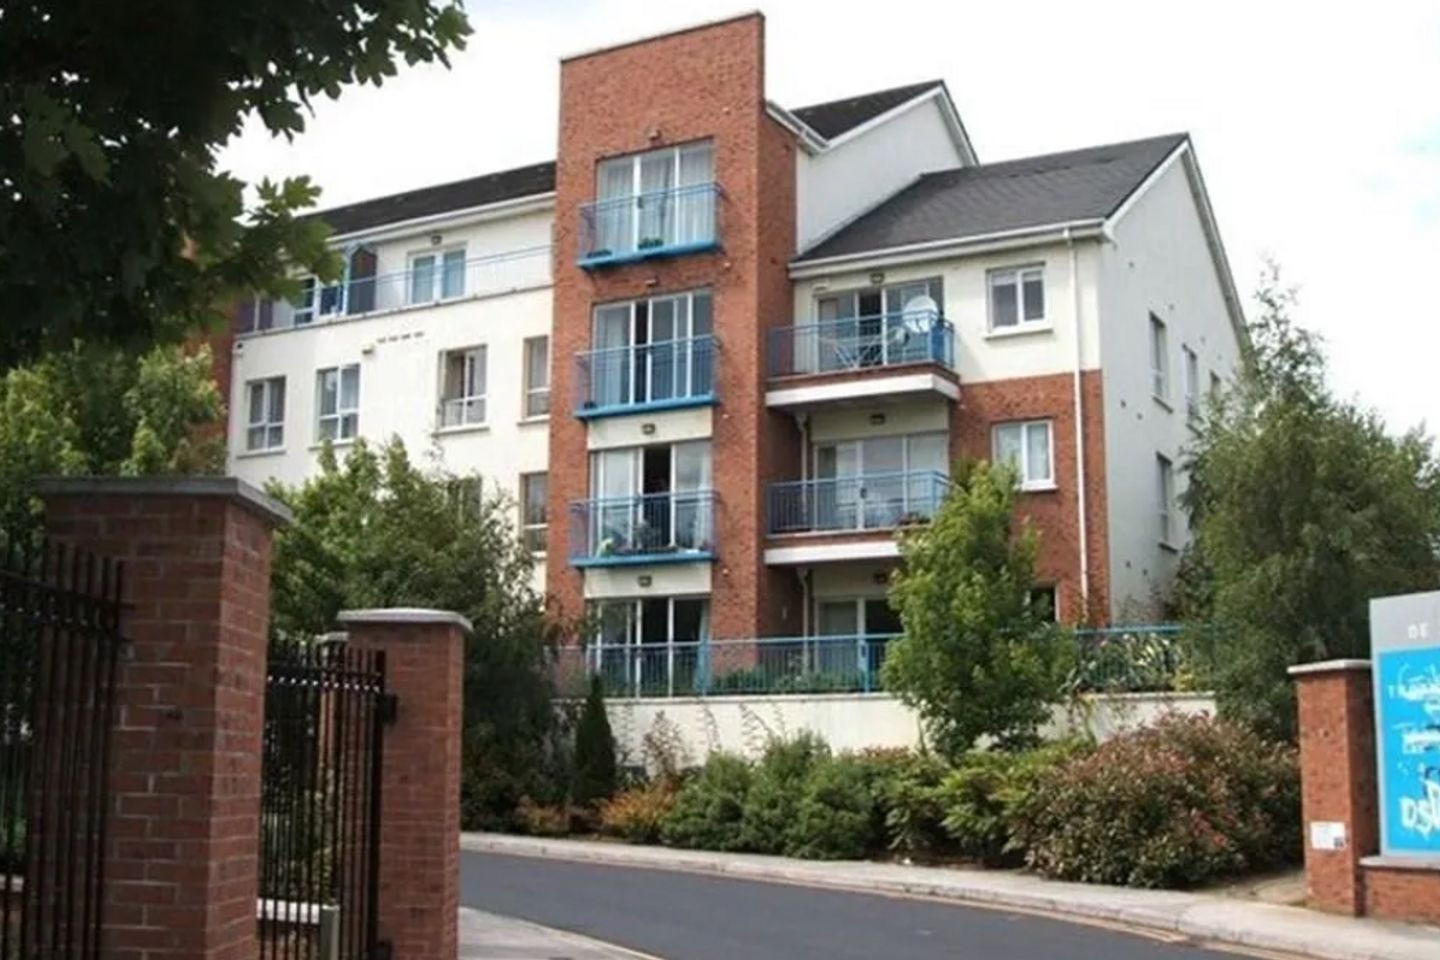 Apartment 51, Block C, Thornfield Square, Clondalkin, Dublin 22, D22EF85